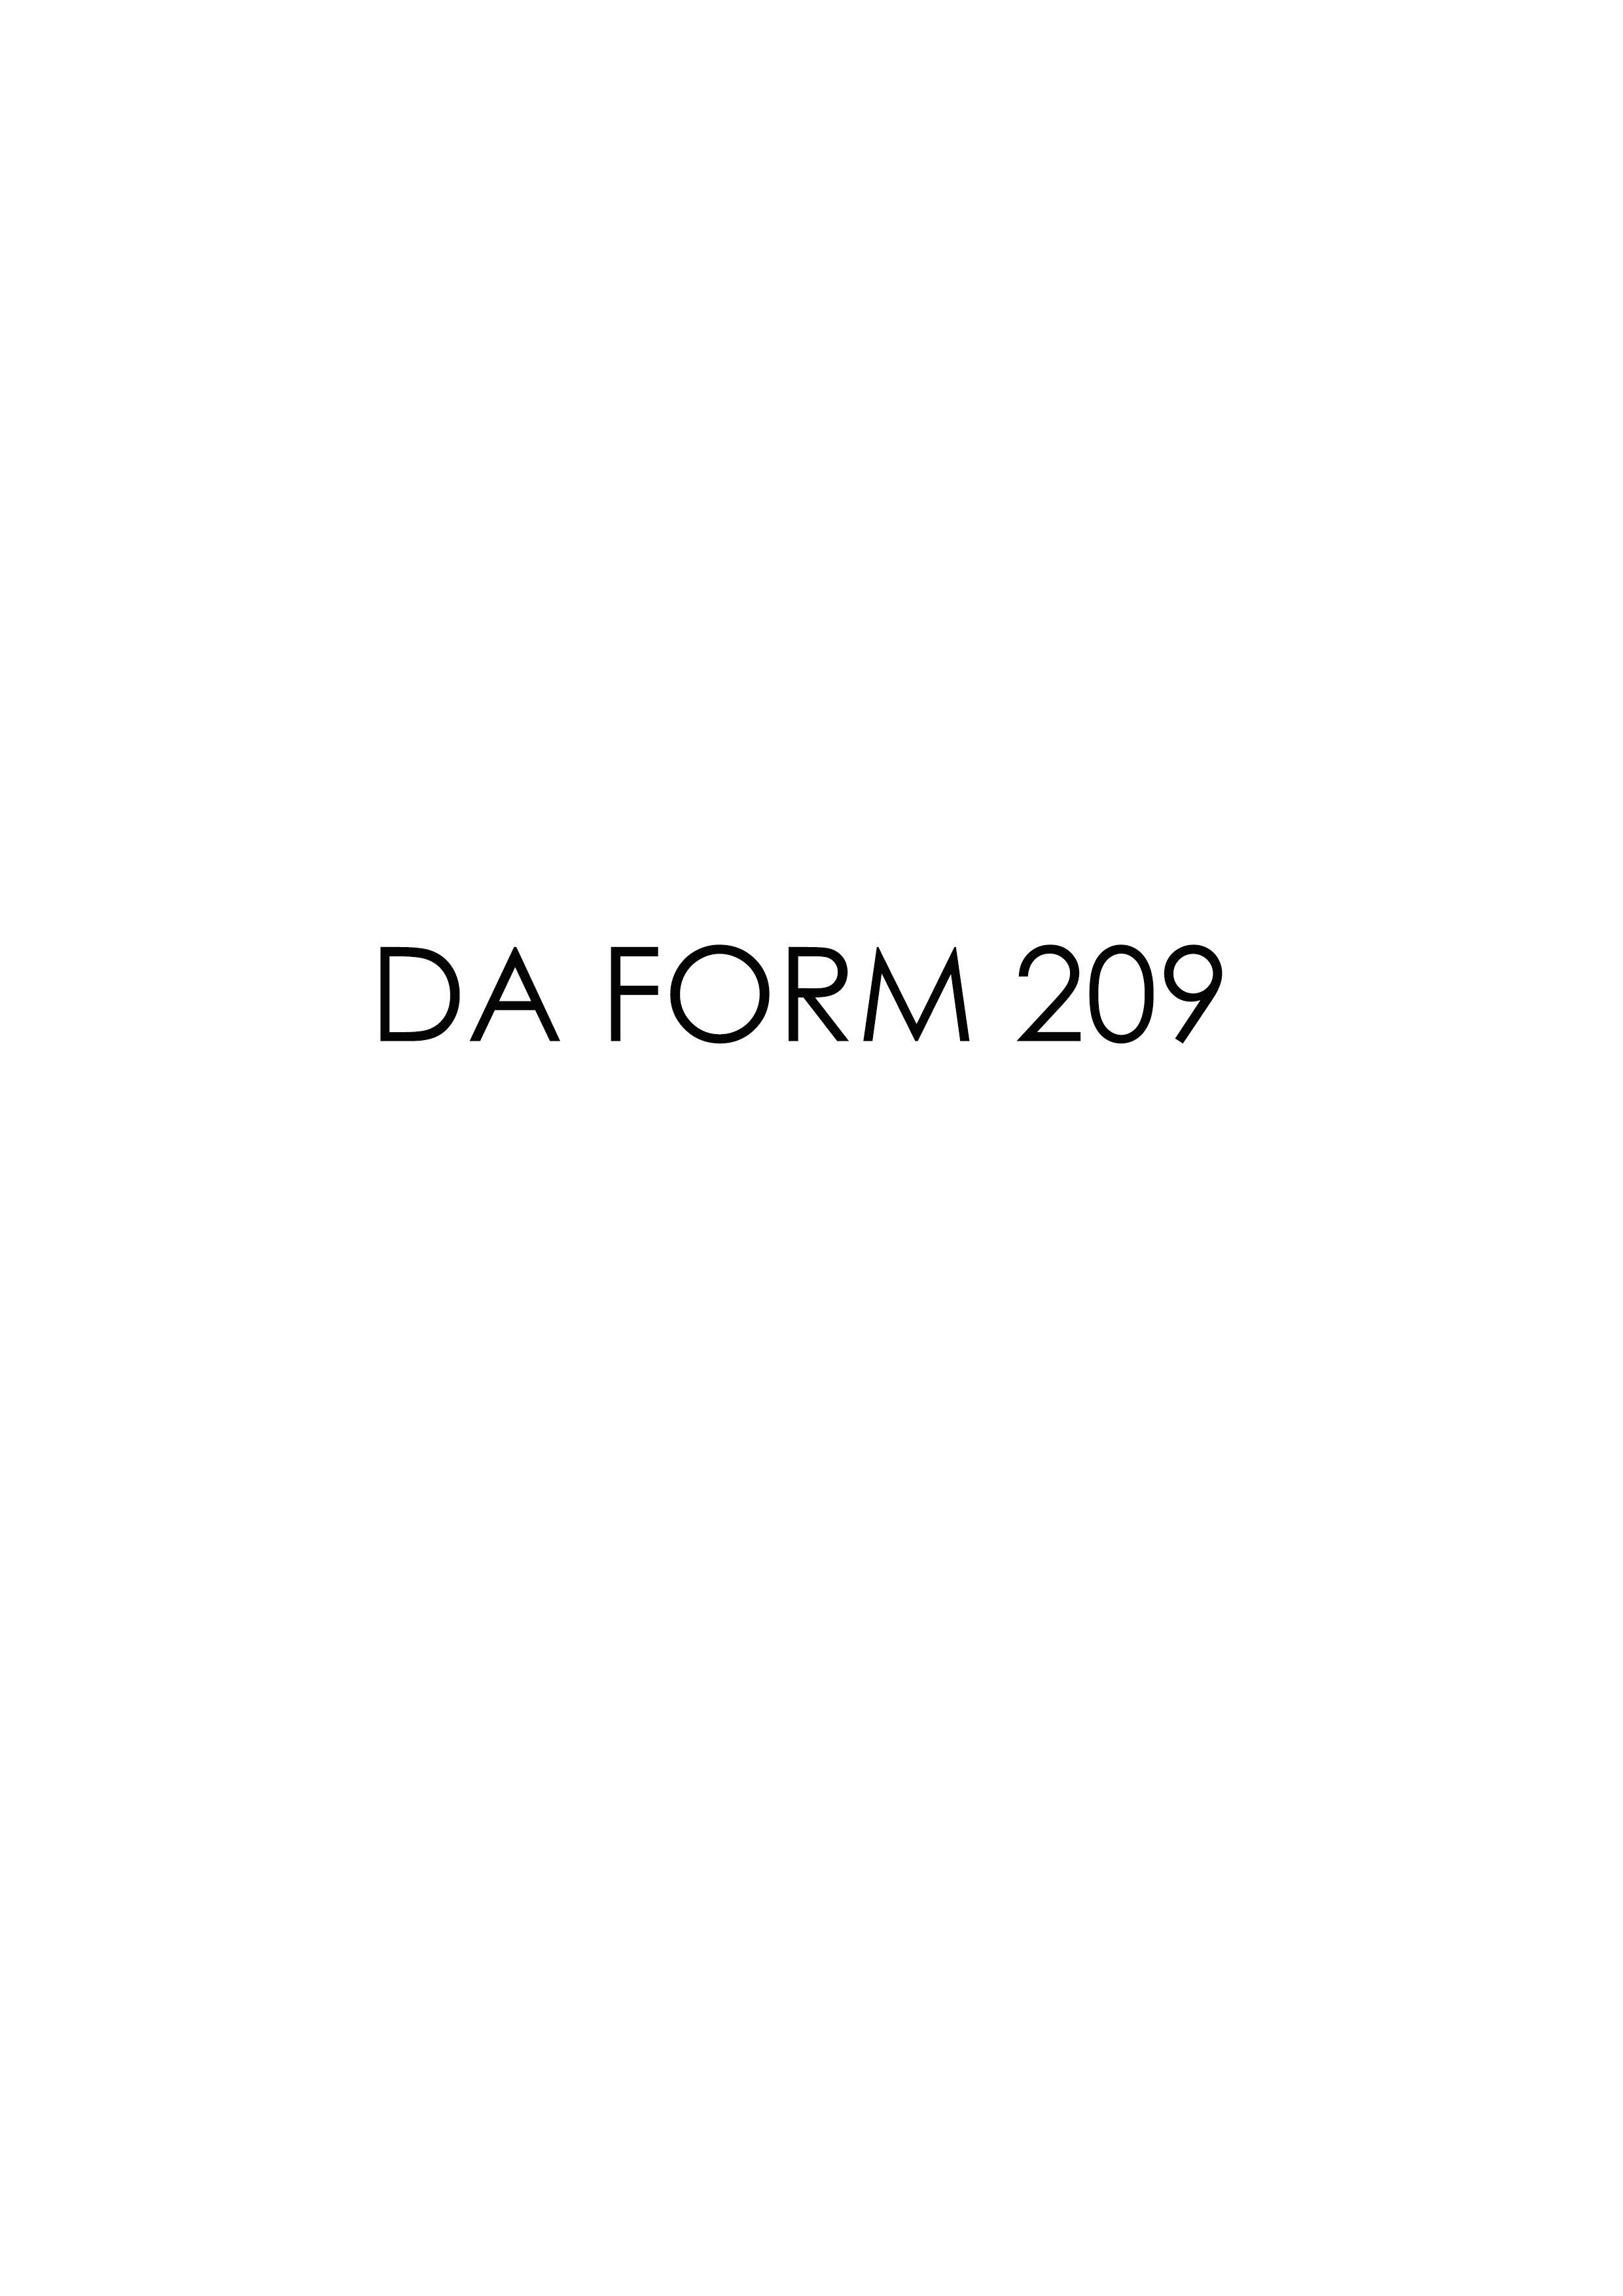 da Form 209 fillable